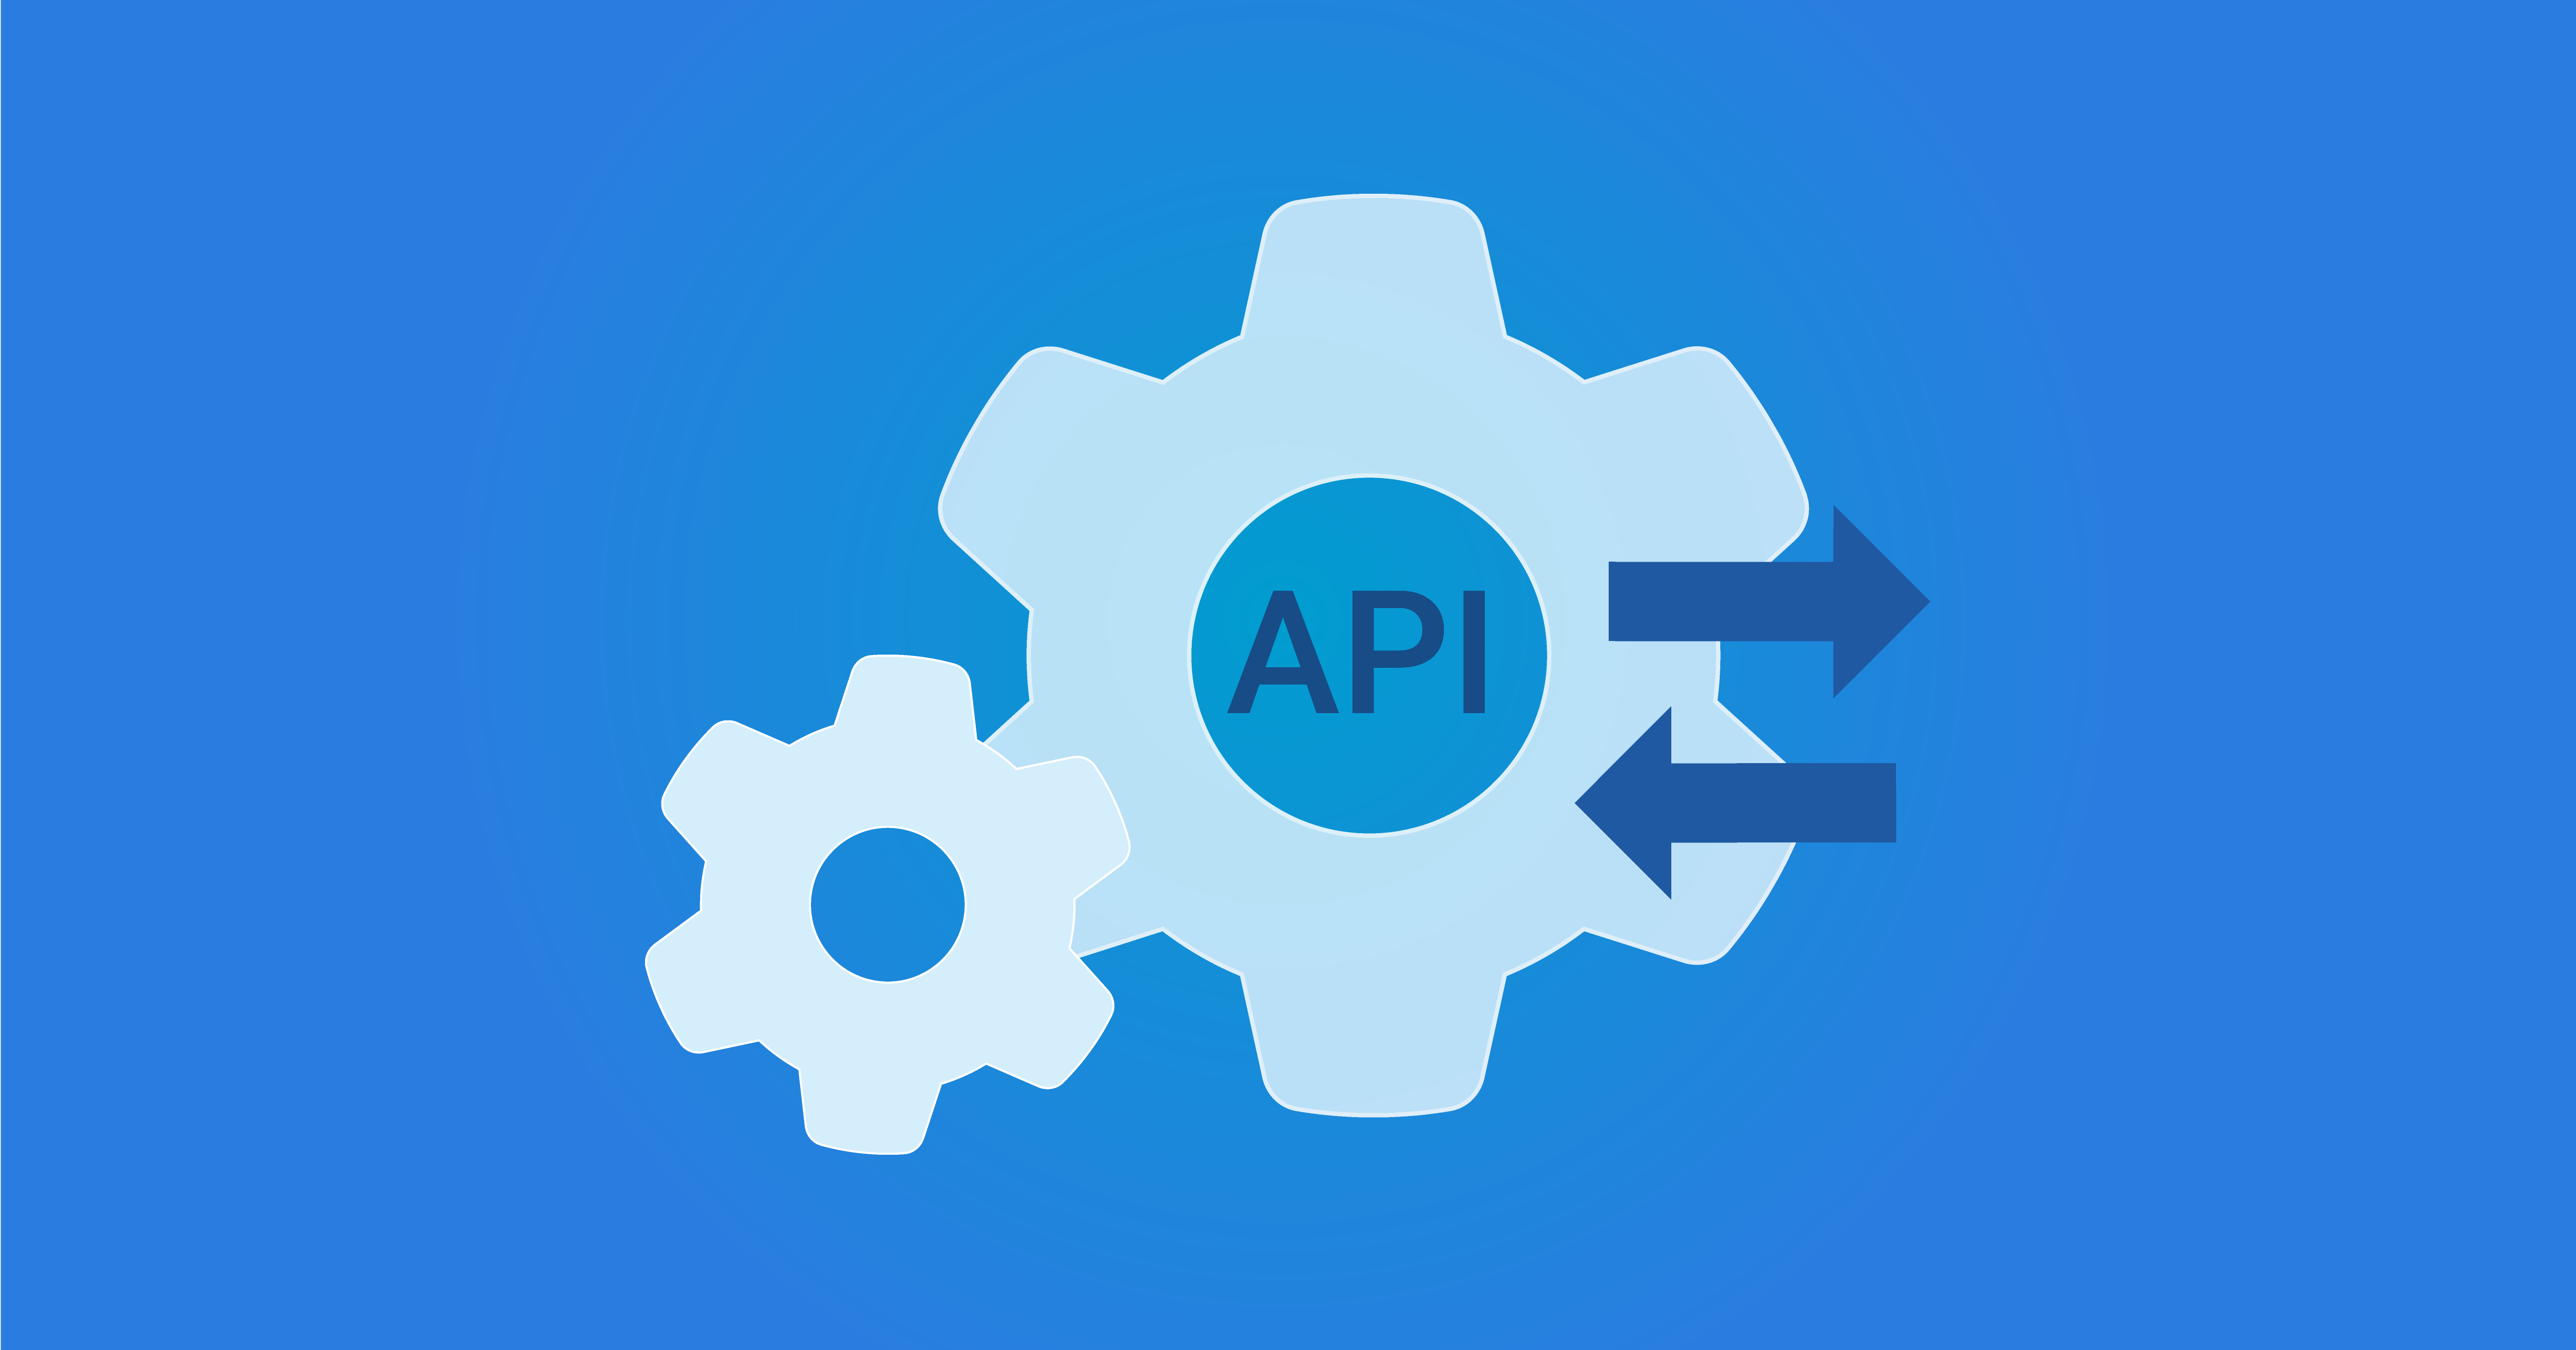 Application Programming Interface (API)